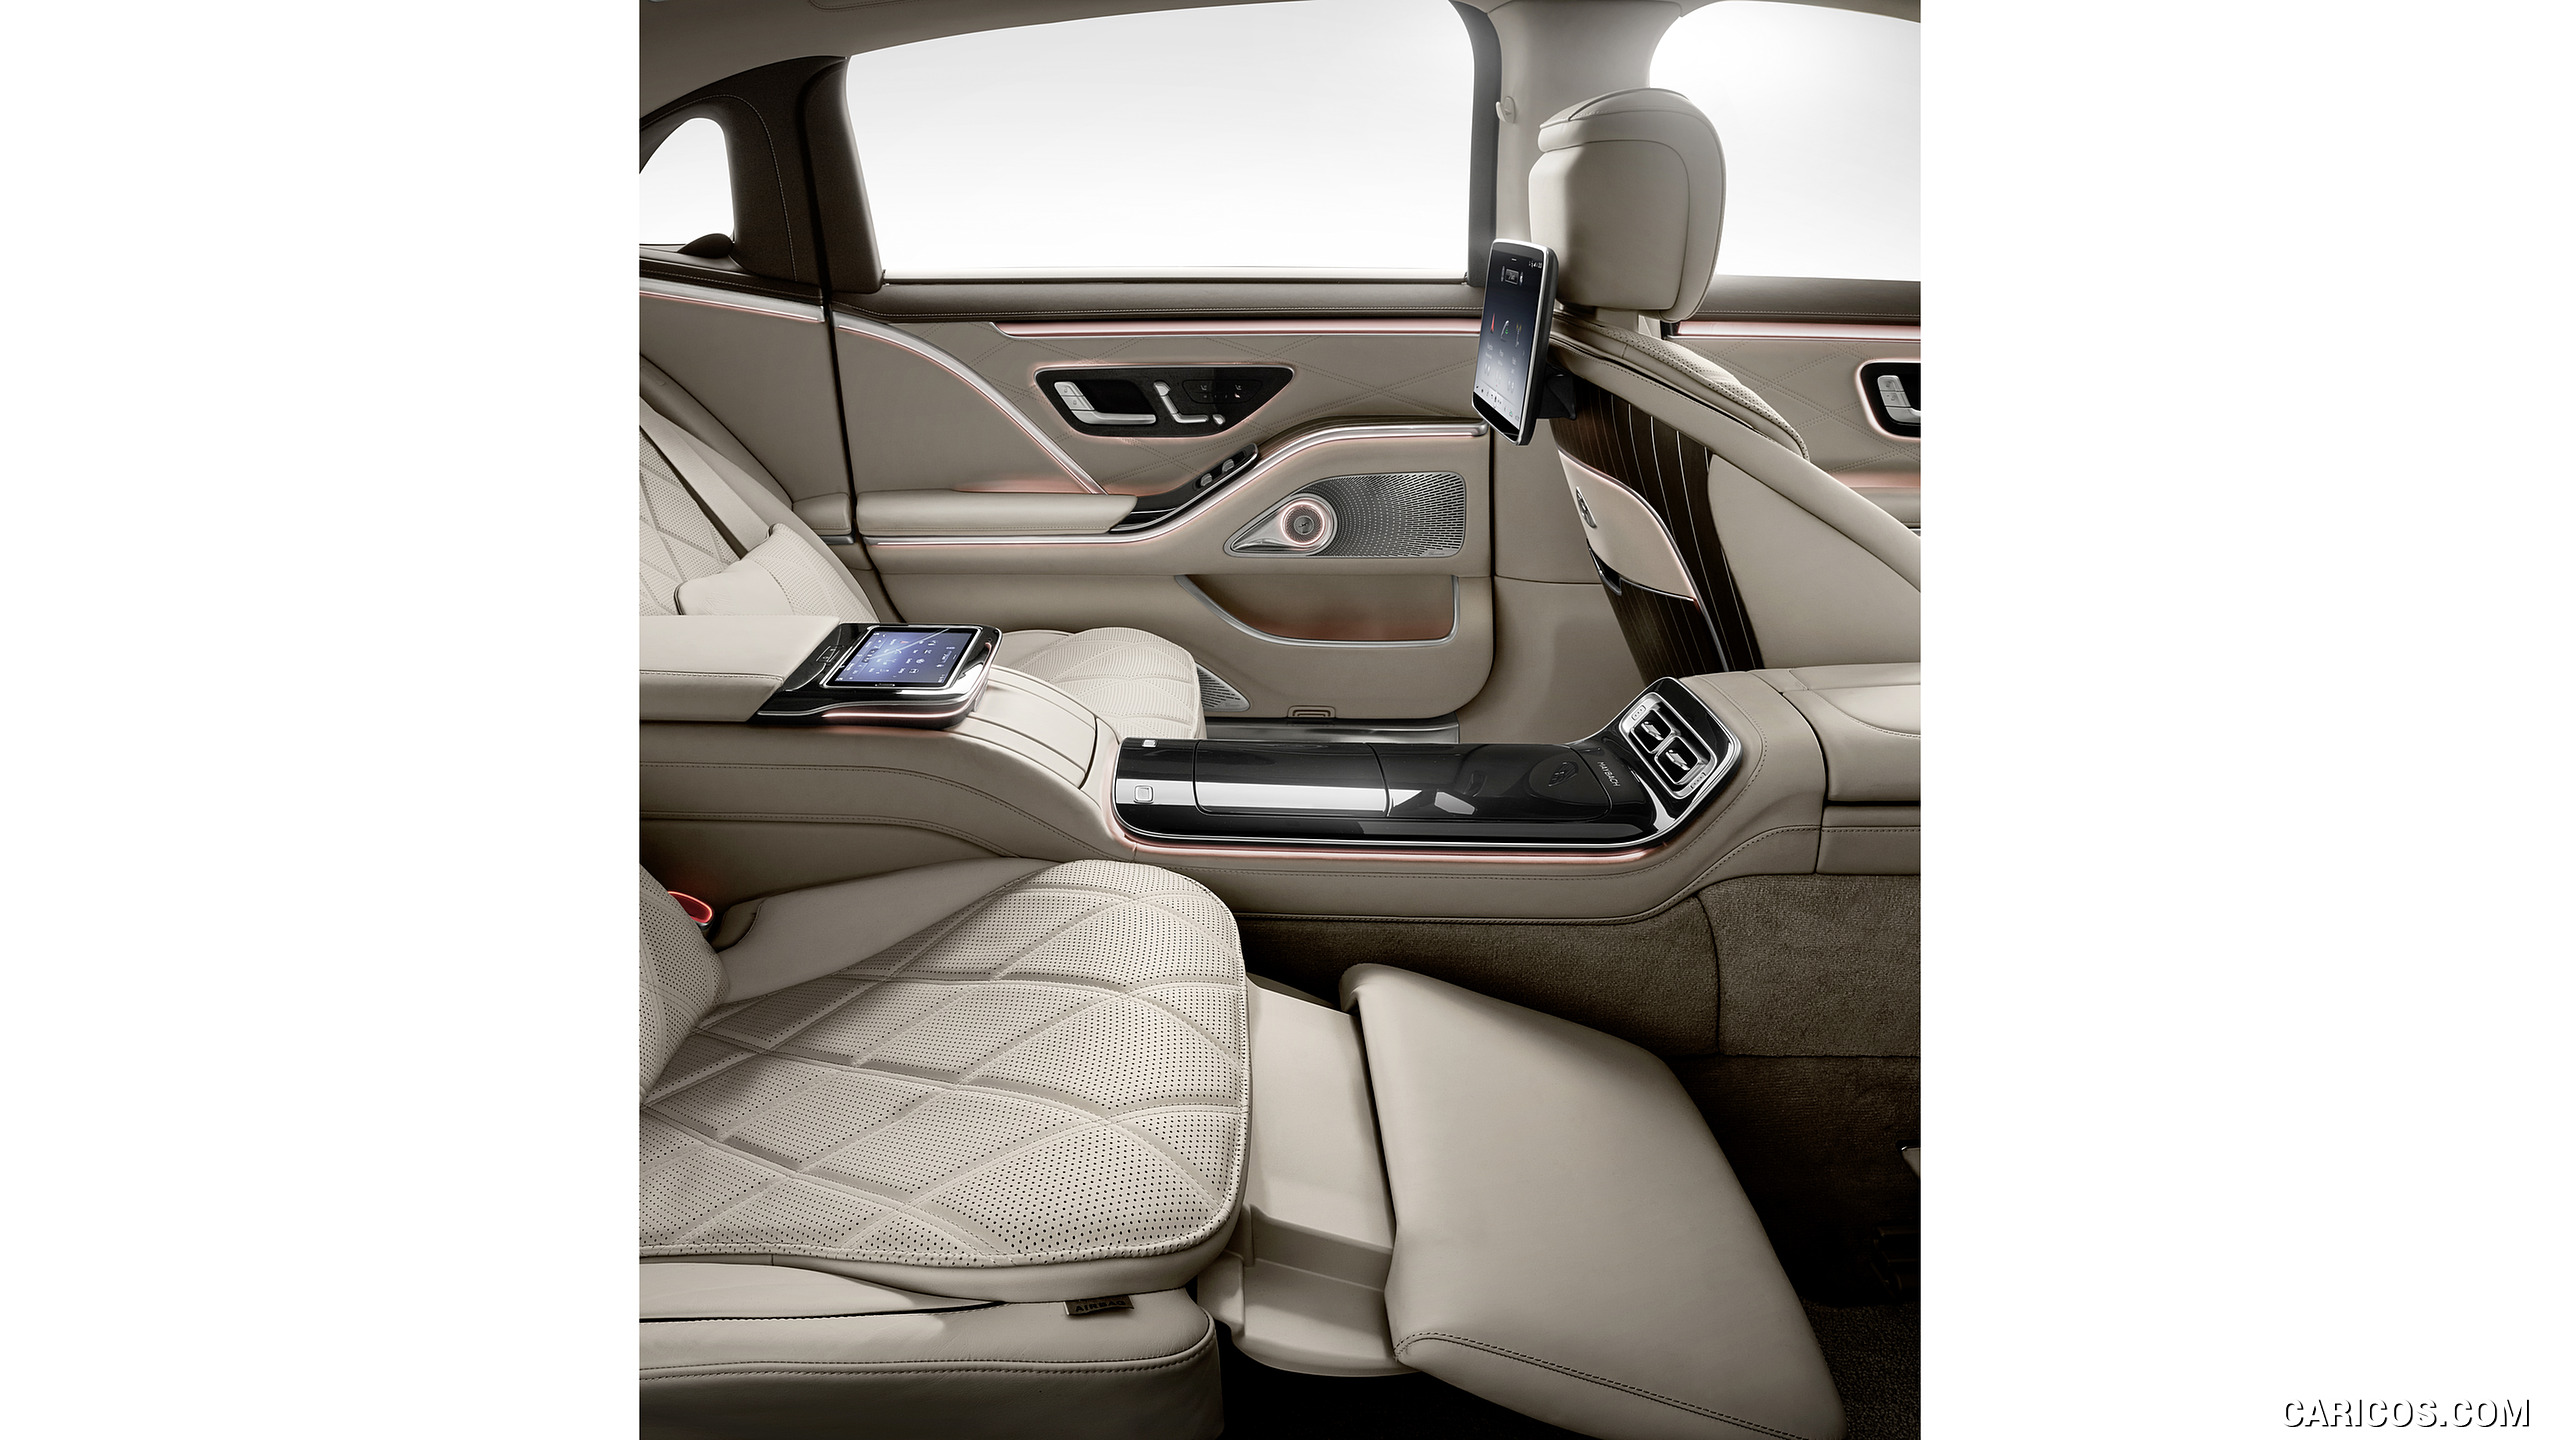 2021 Mercedes-Maybach S-Class (Leather Nappa macchiato beige / bronze brown pearl) - Interior, Rear Seats, #77 of 157